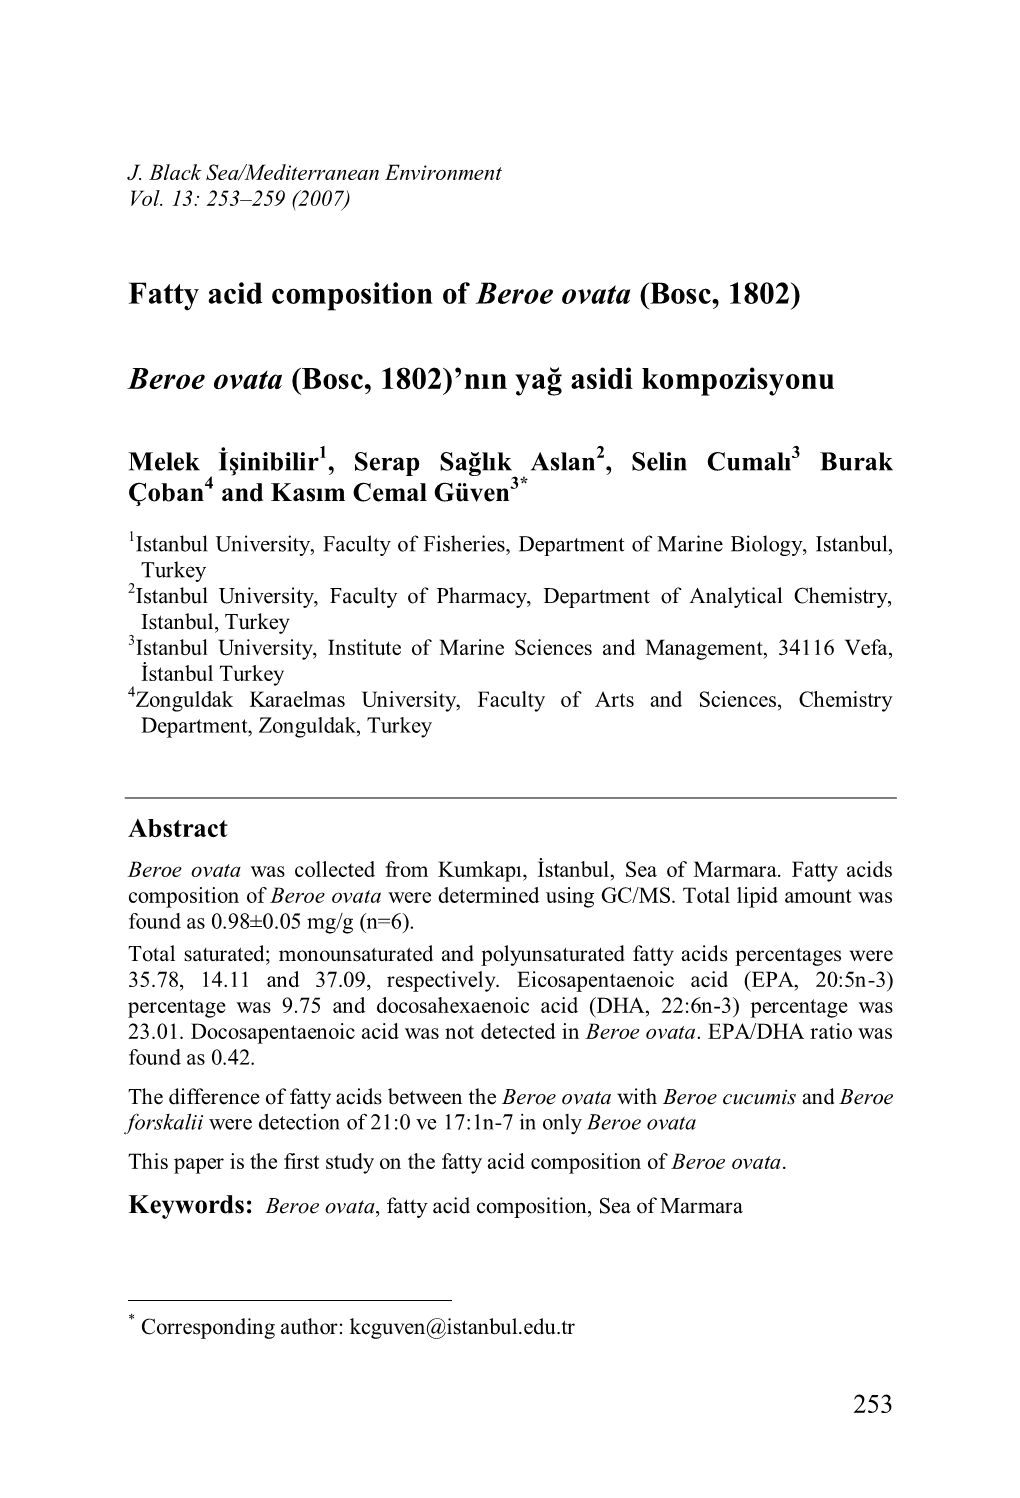 Fatty Acid Composition of Beroe Ovata (Bosc, 1802)